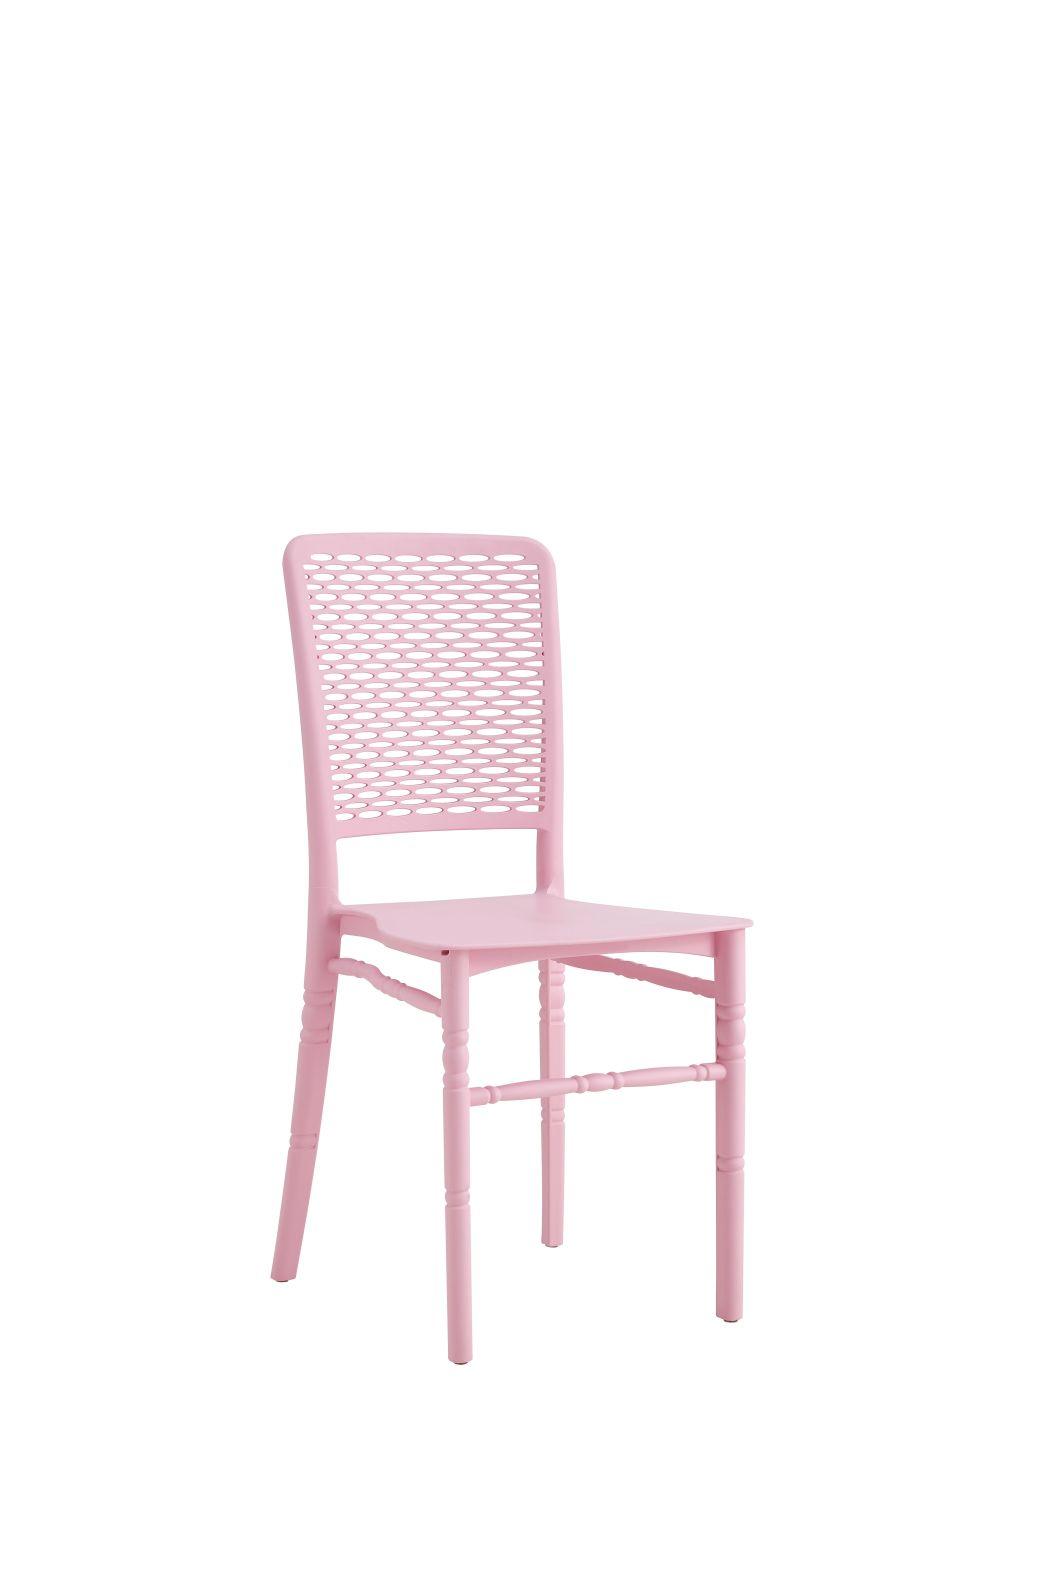 Wholesale Modern Cheap Plastic Chair PP Wholesale Garden Plastic Chairs